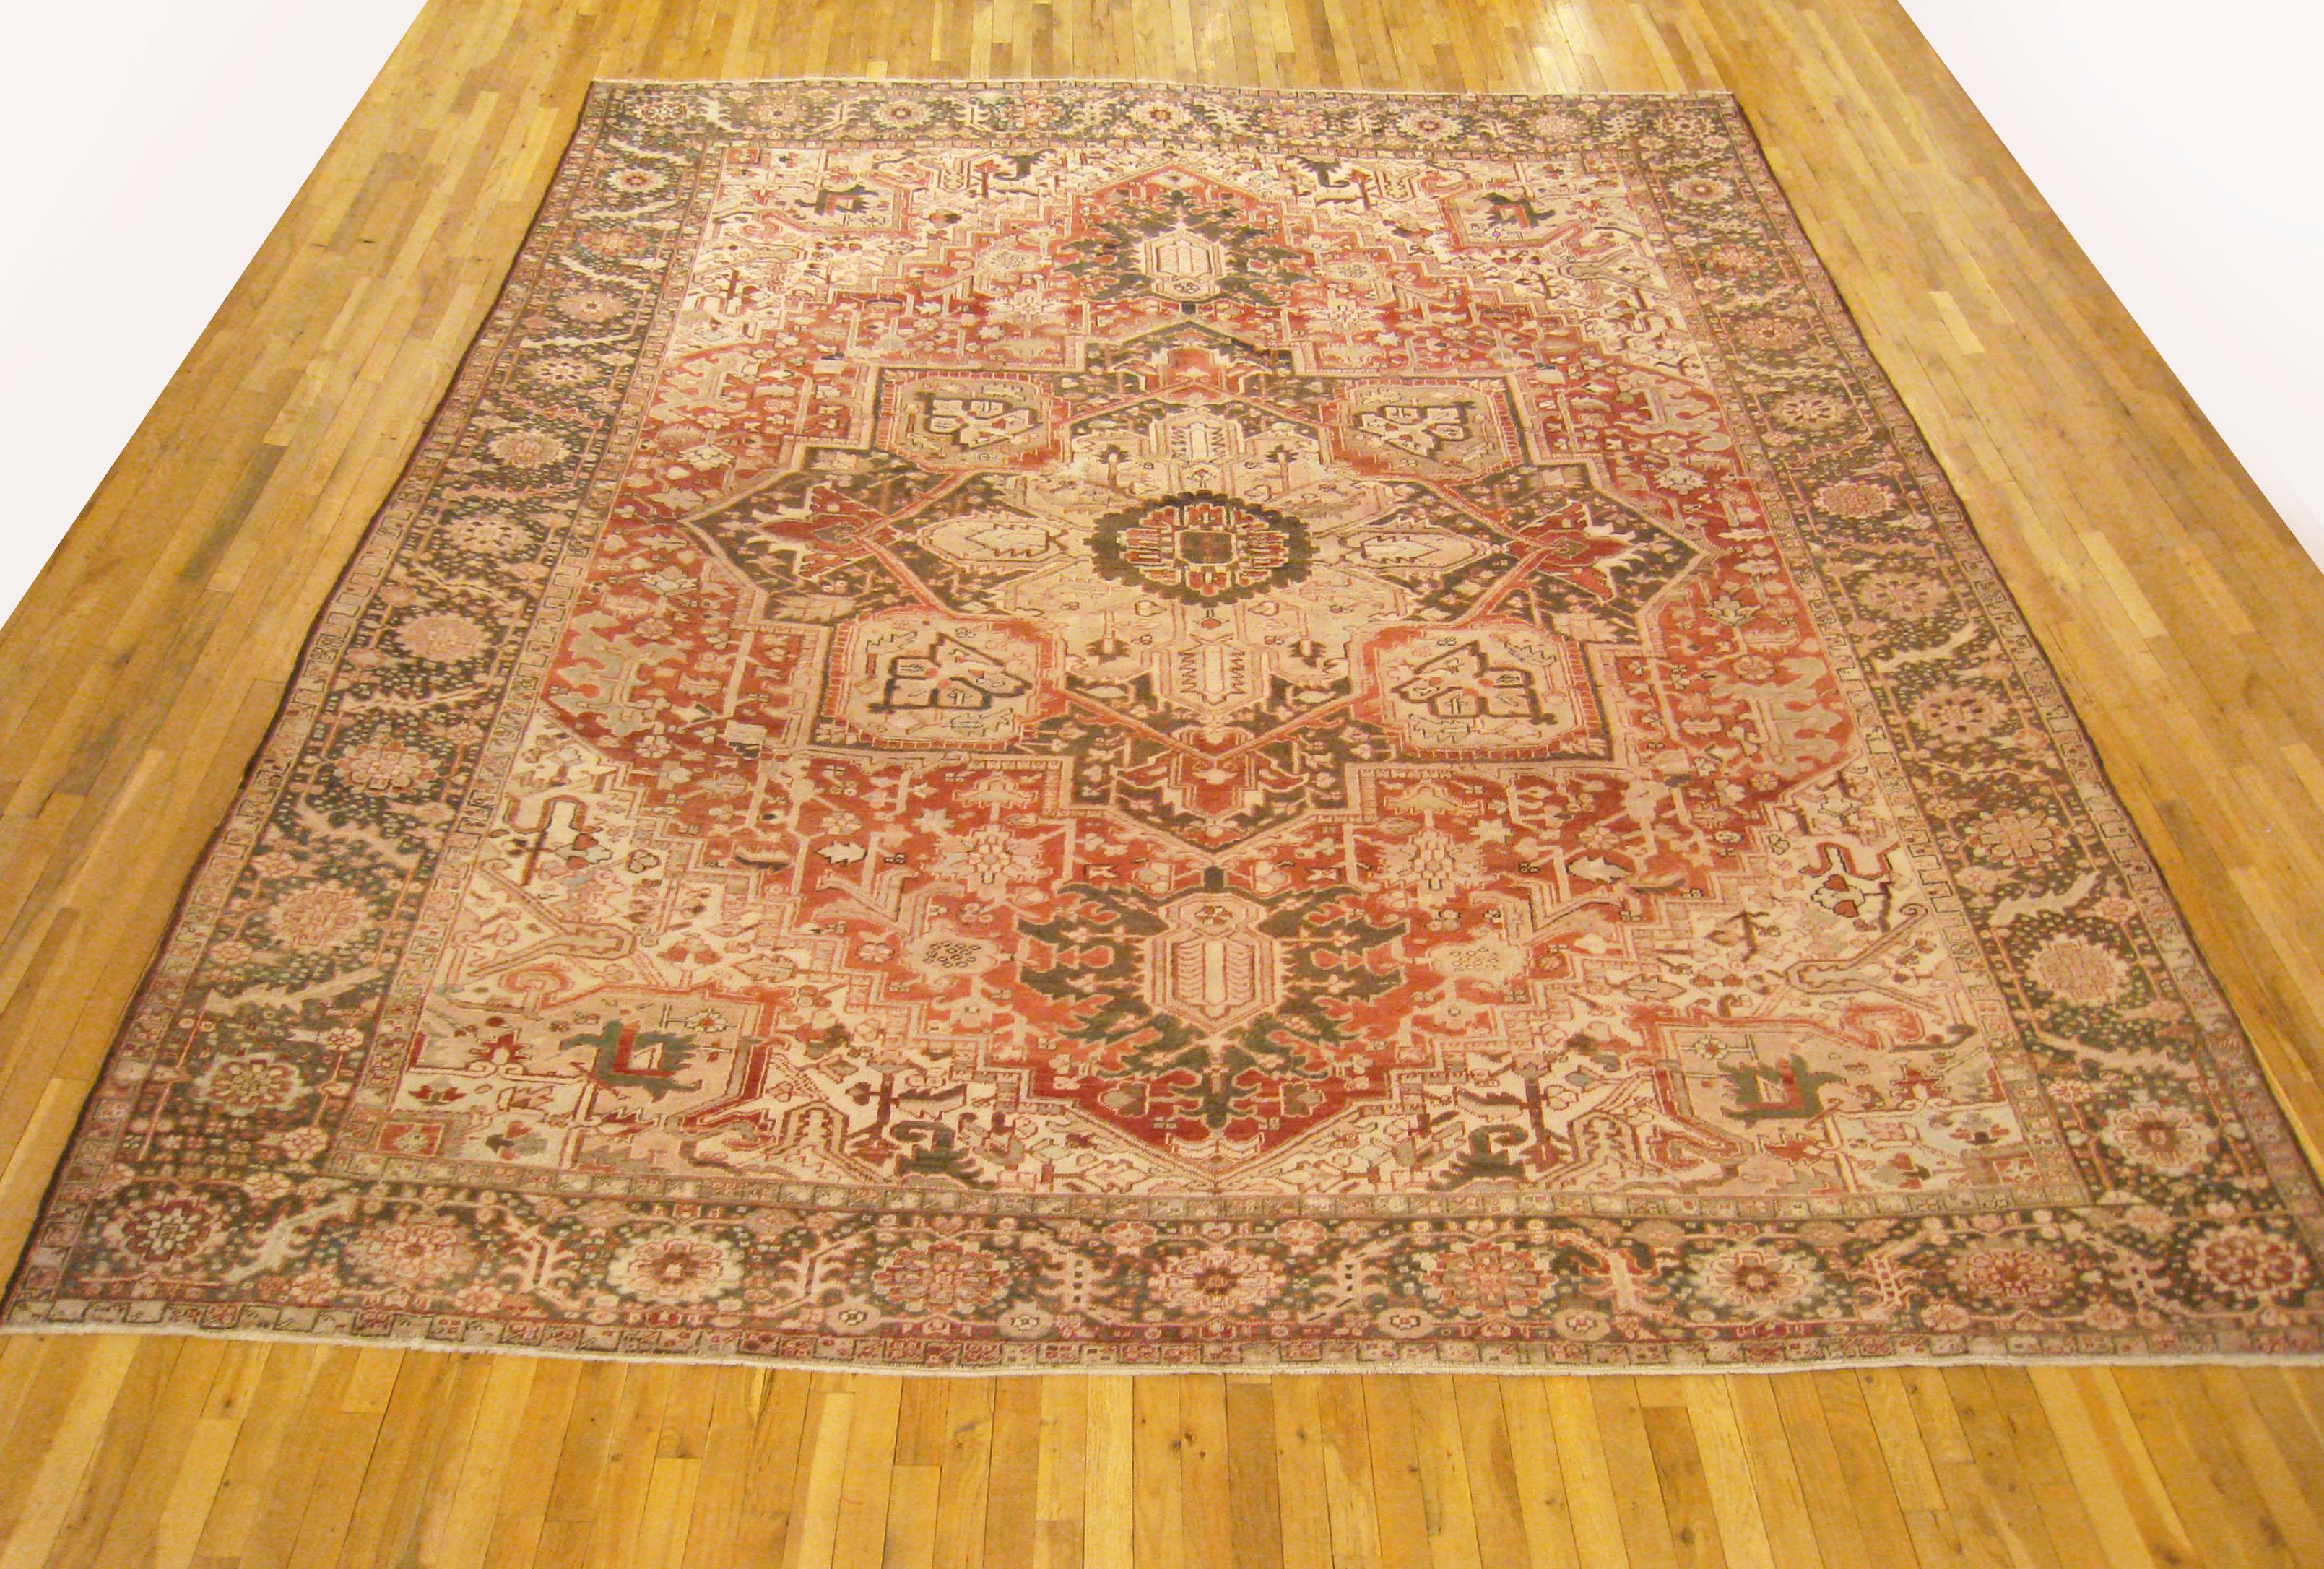 Vintage Persian Heriz Oriental rug, Room size

A vintage Persian Heriz oriental rug, size 13'2